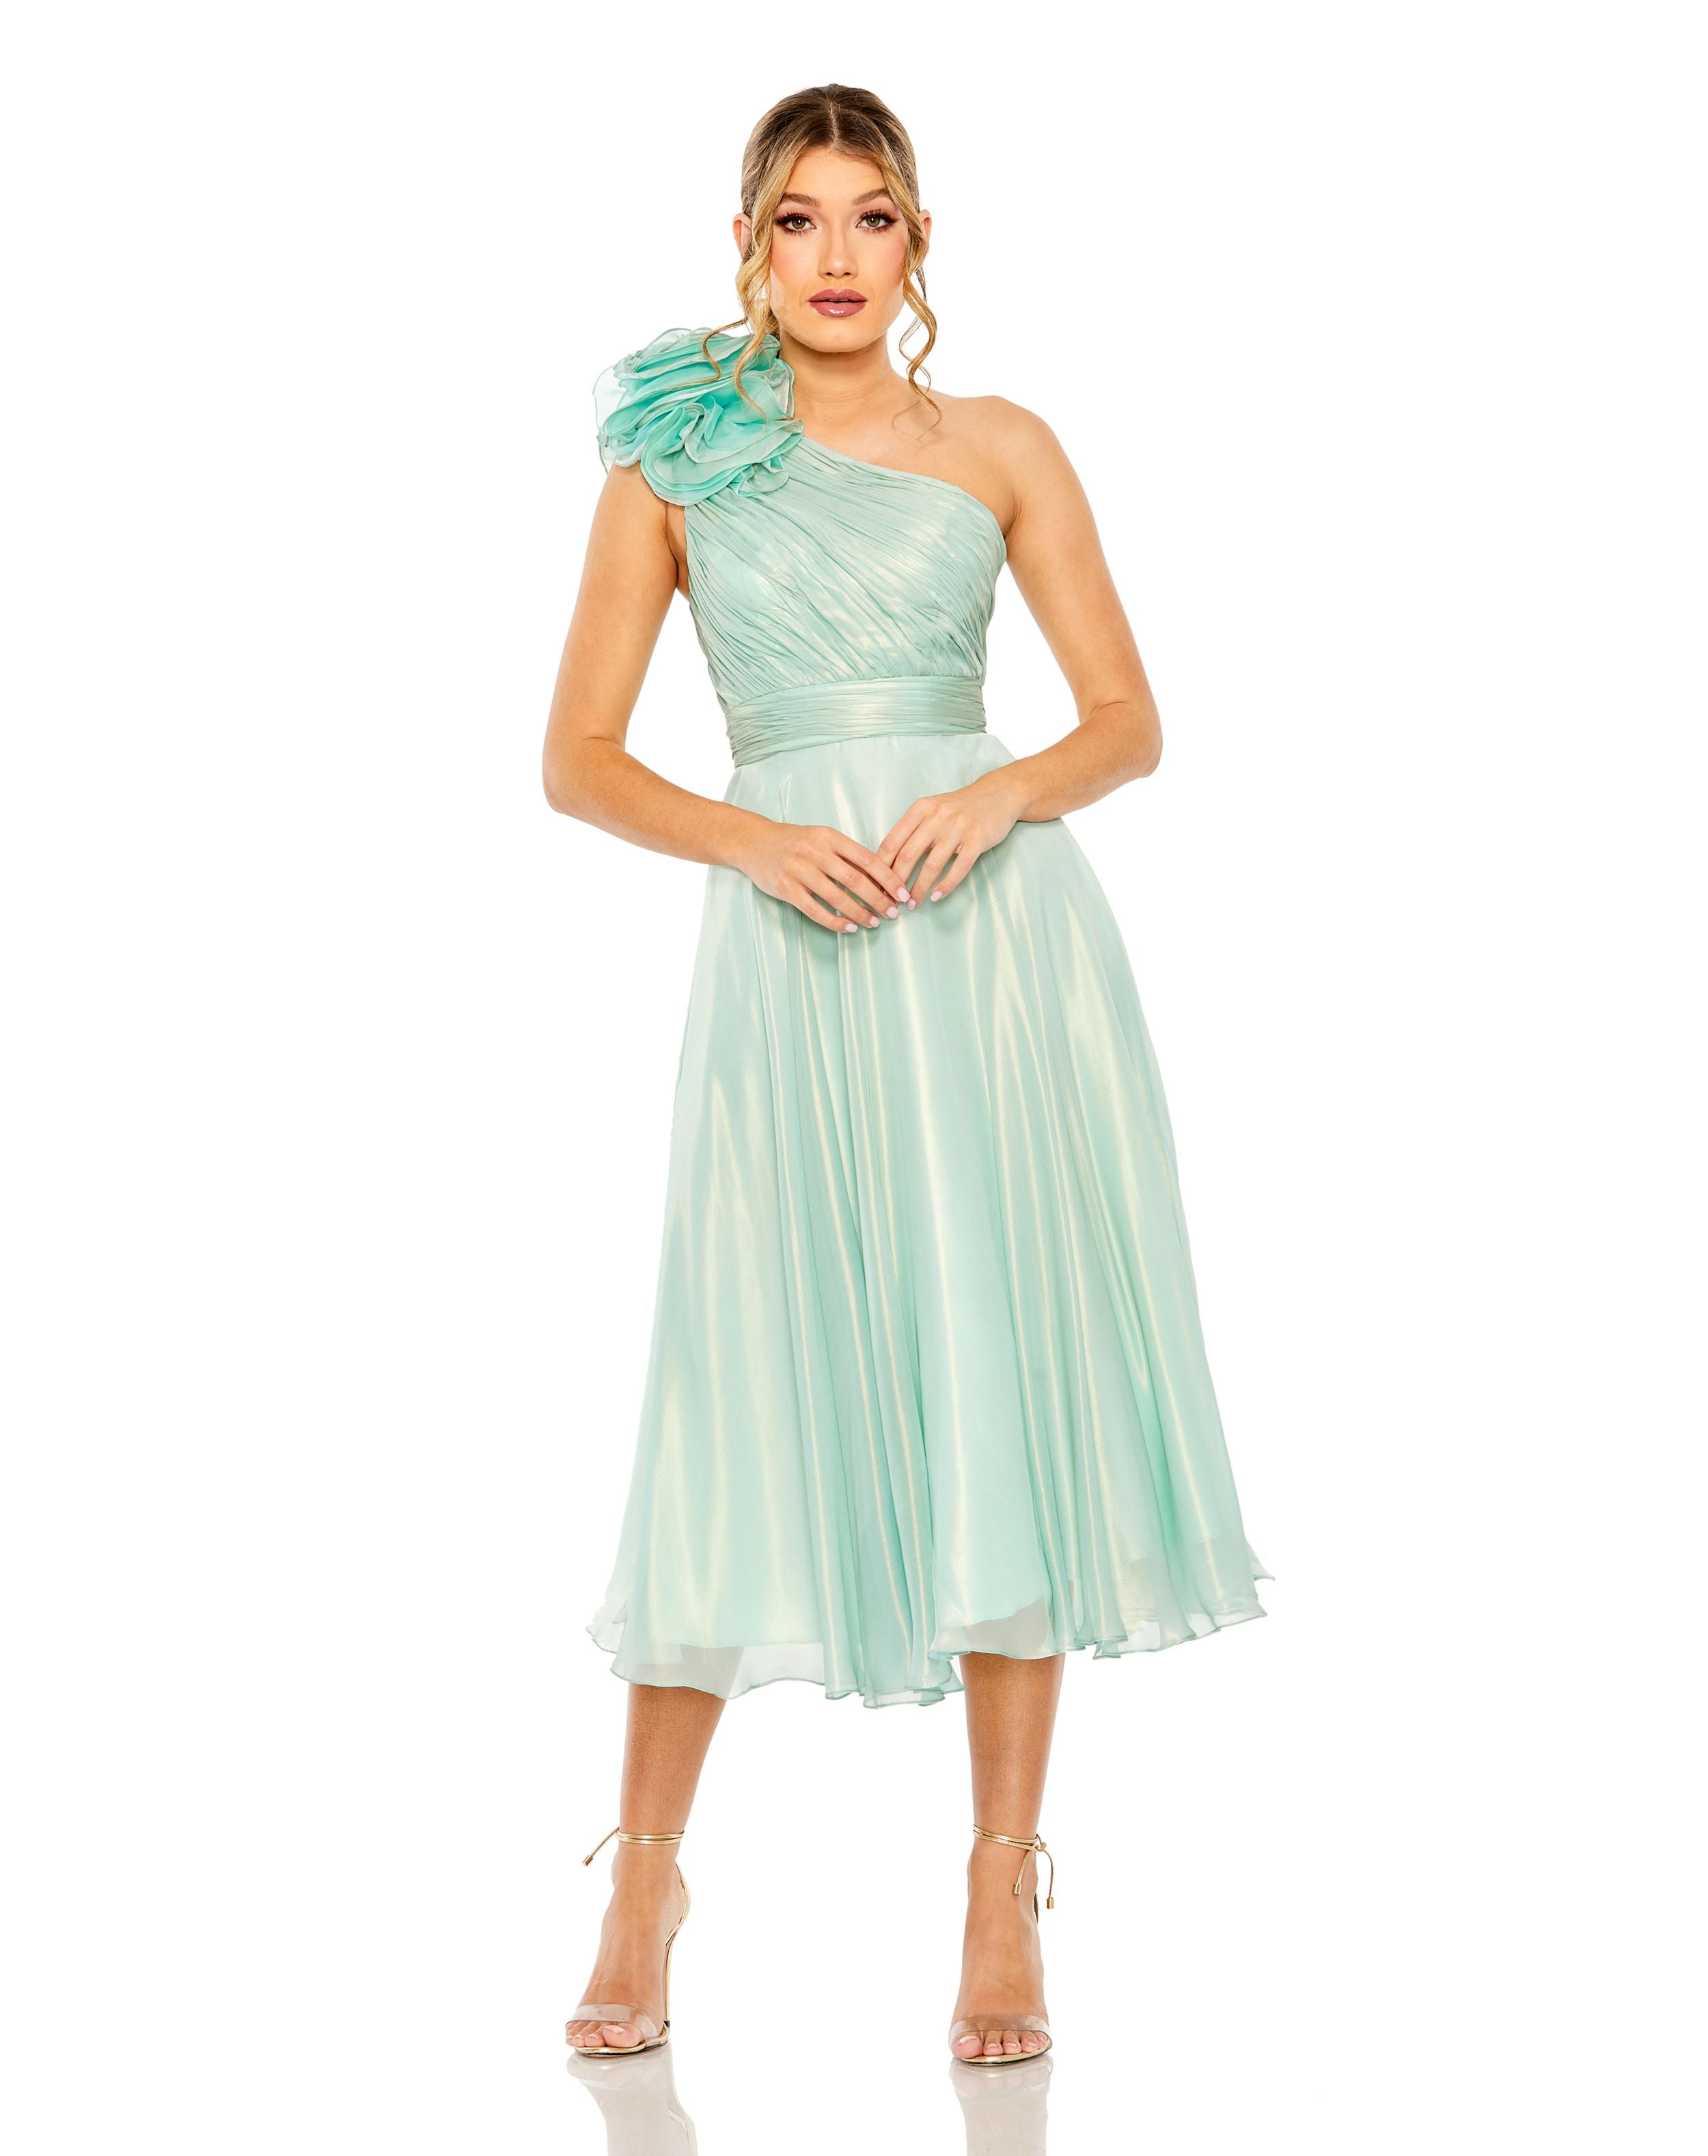 Rosette One Shoulder Tea Length Dress